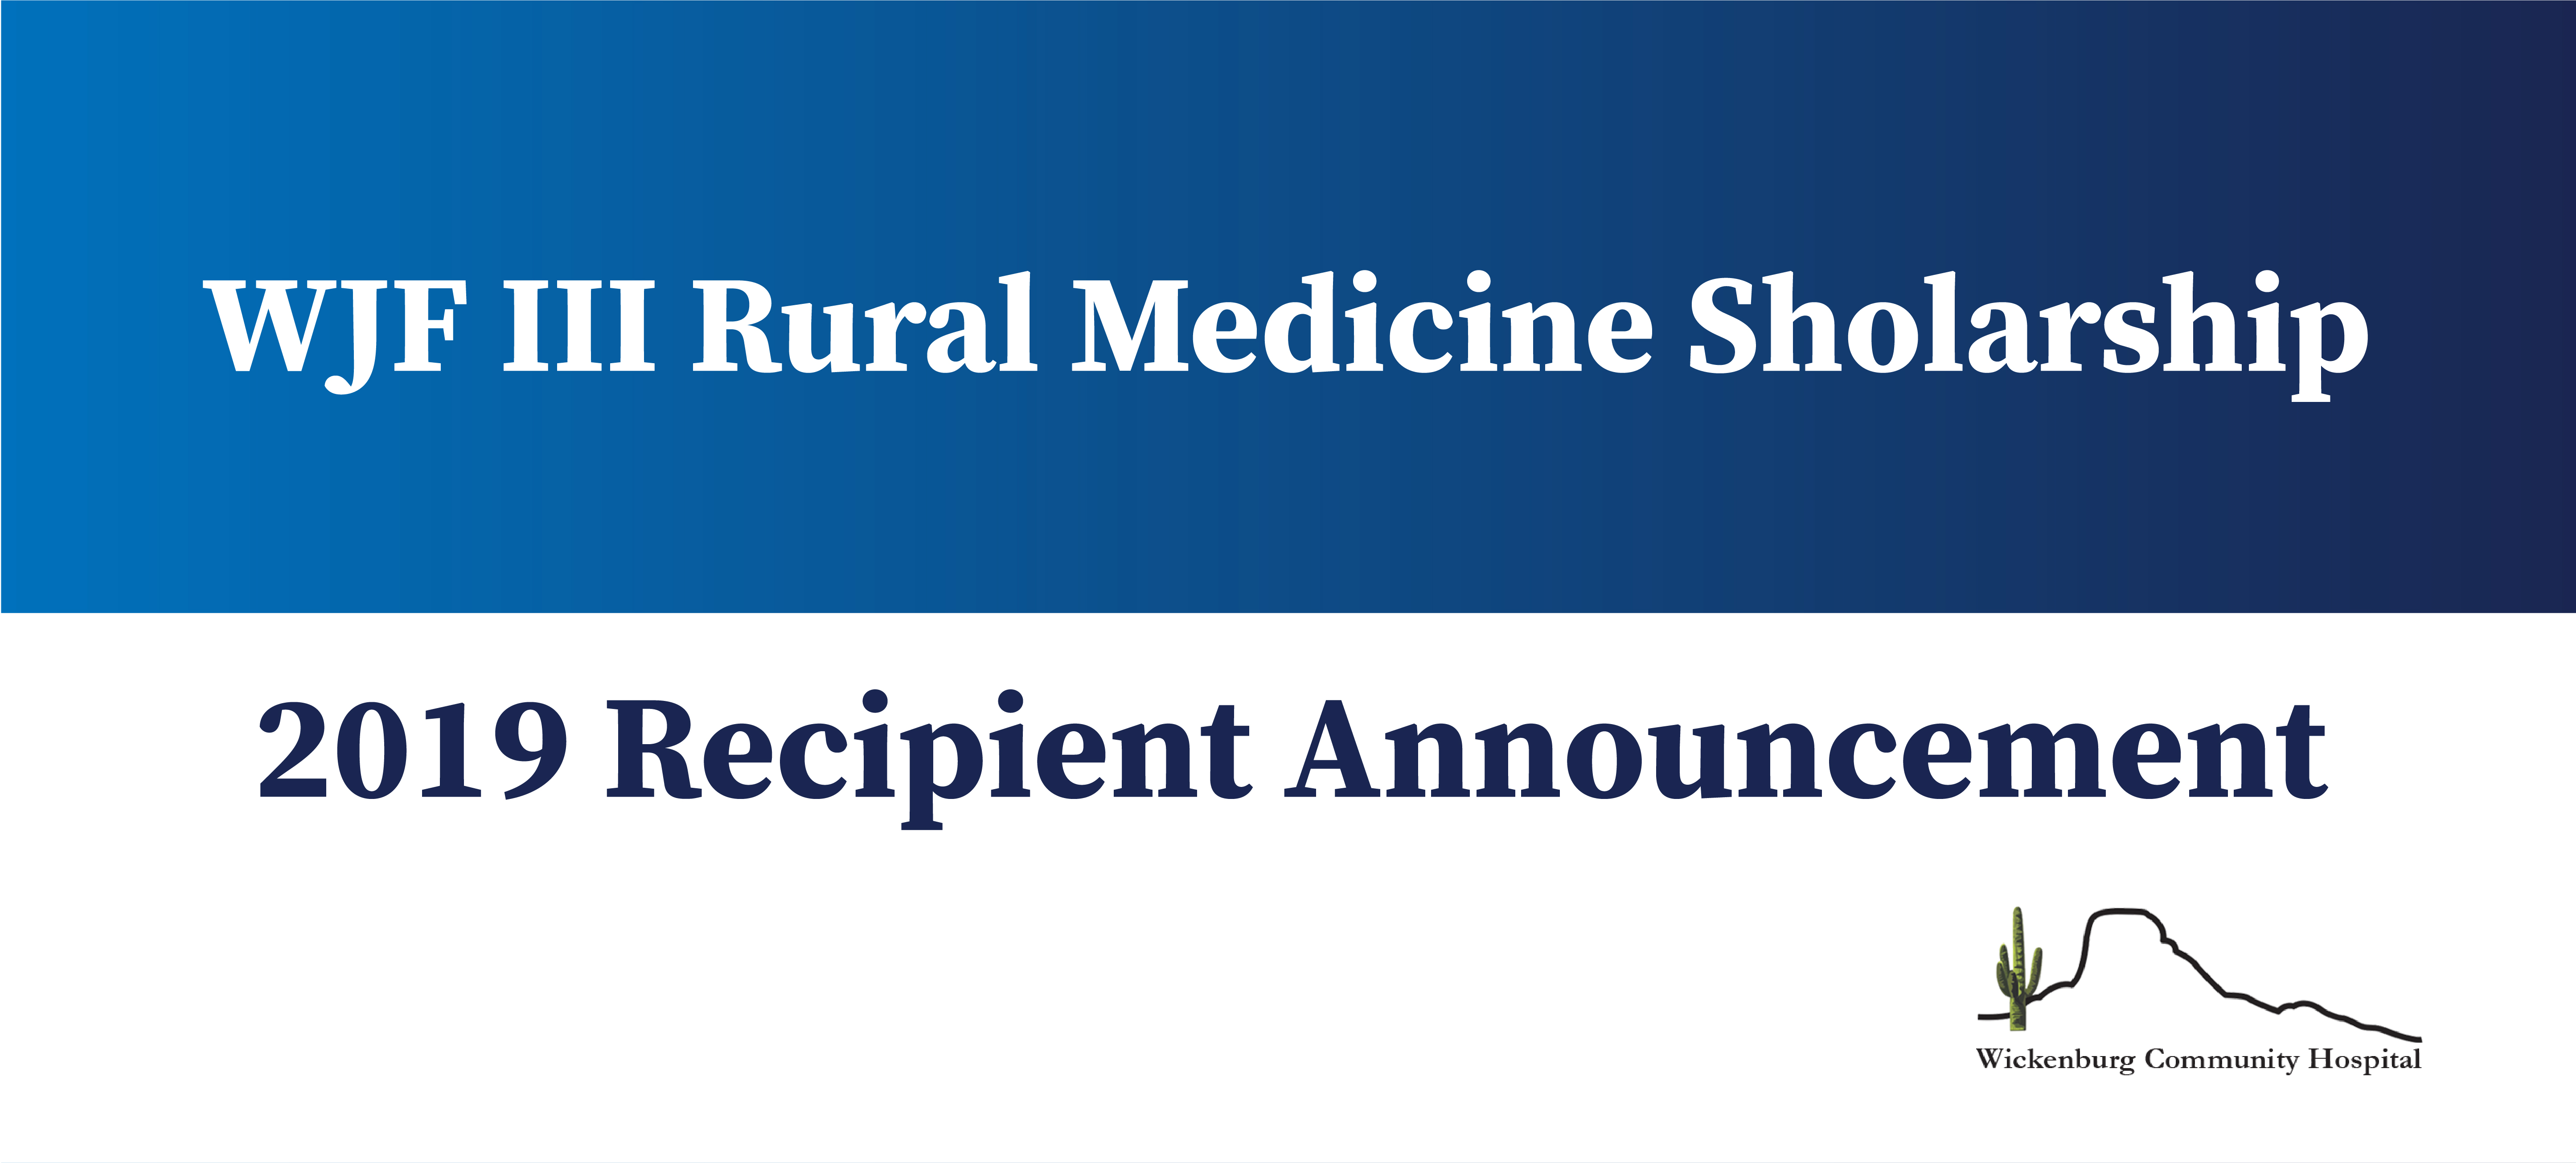 WJF III Rural Medicine Scholarship- 2019 Recipient Announcement